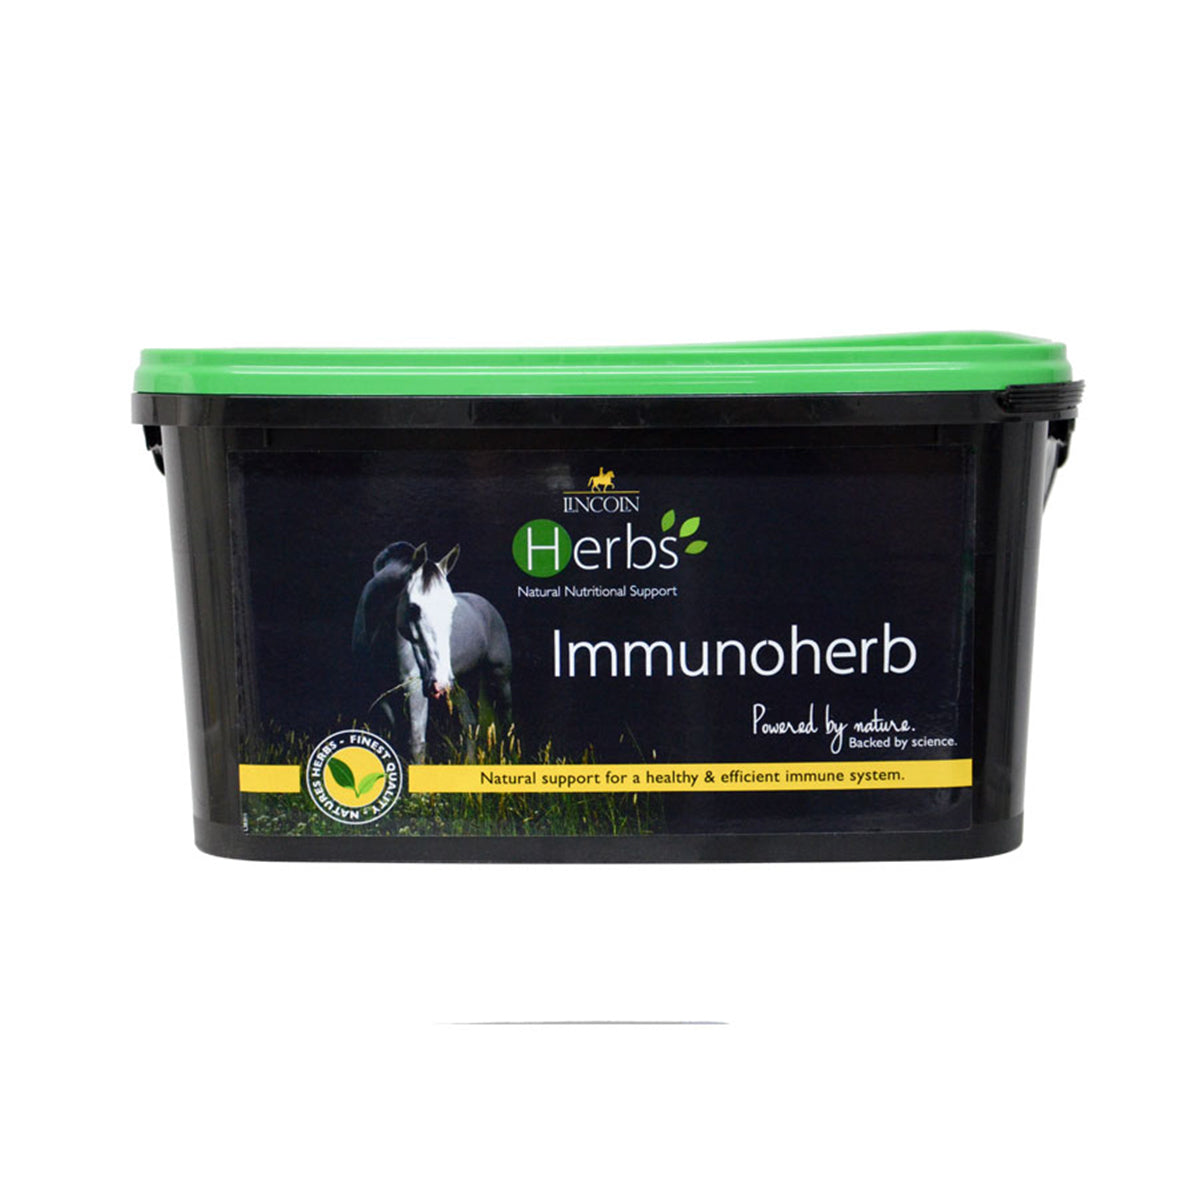 Immunoherbe Lincoln Herbs